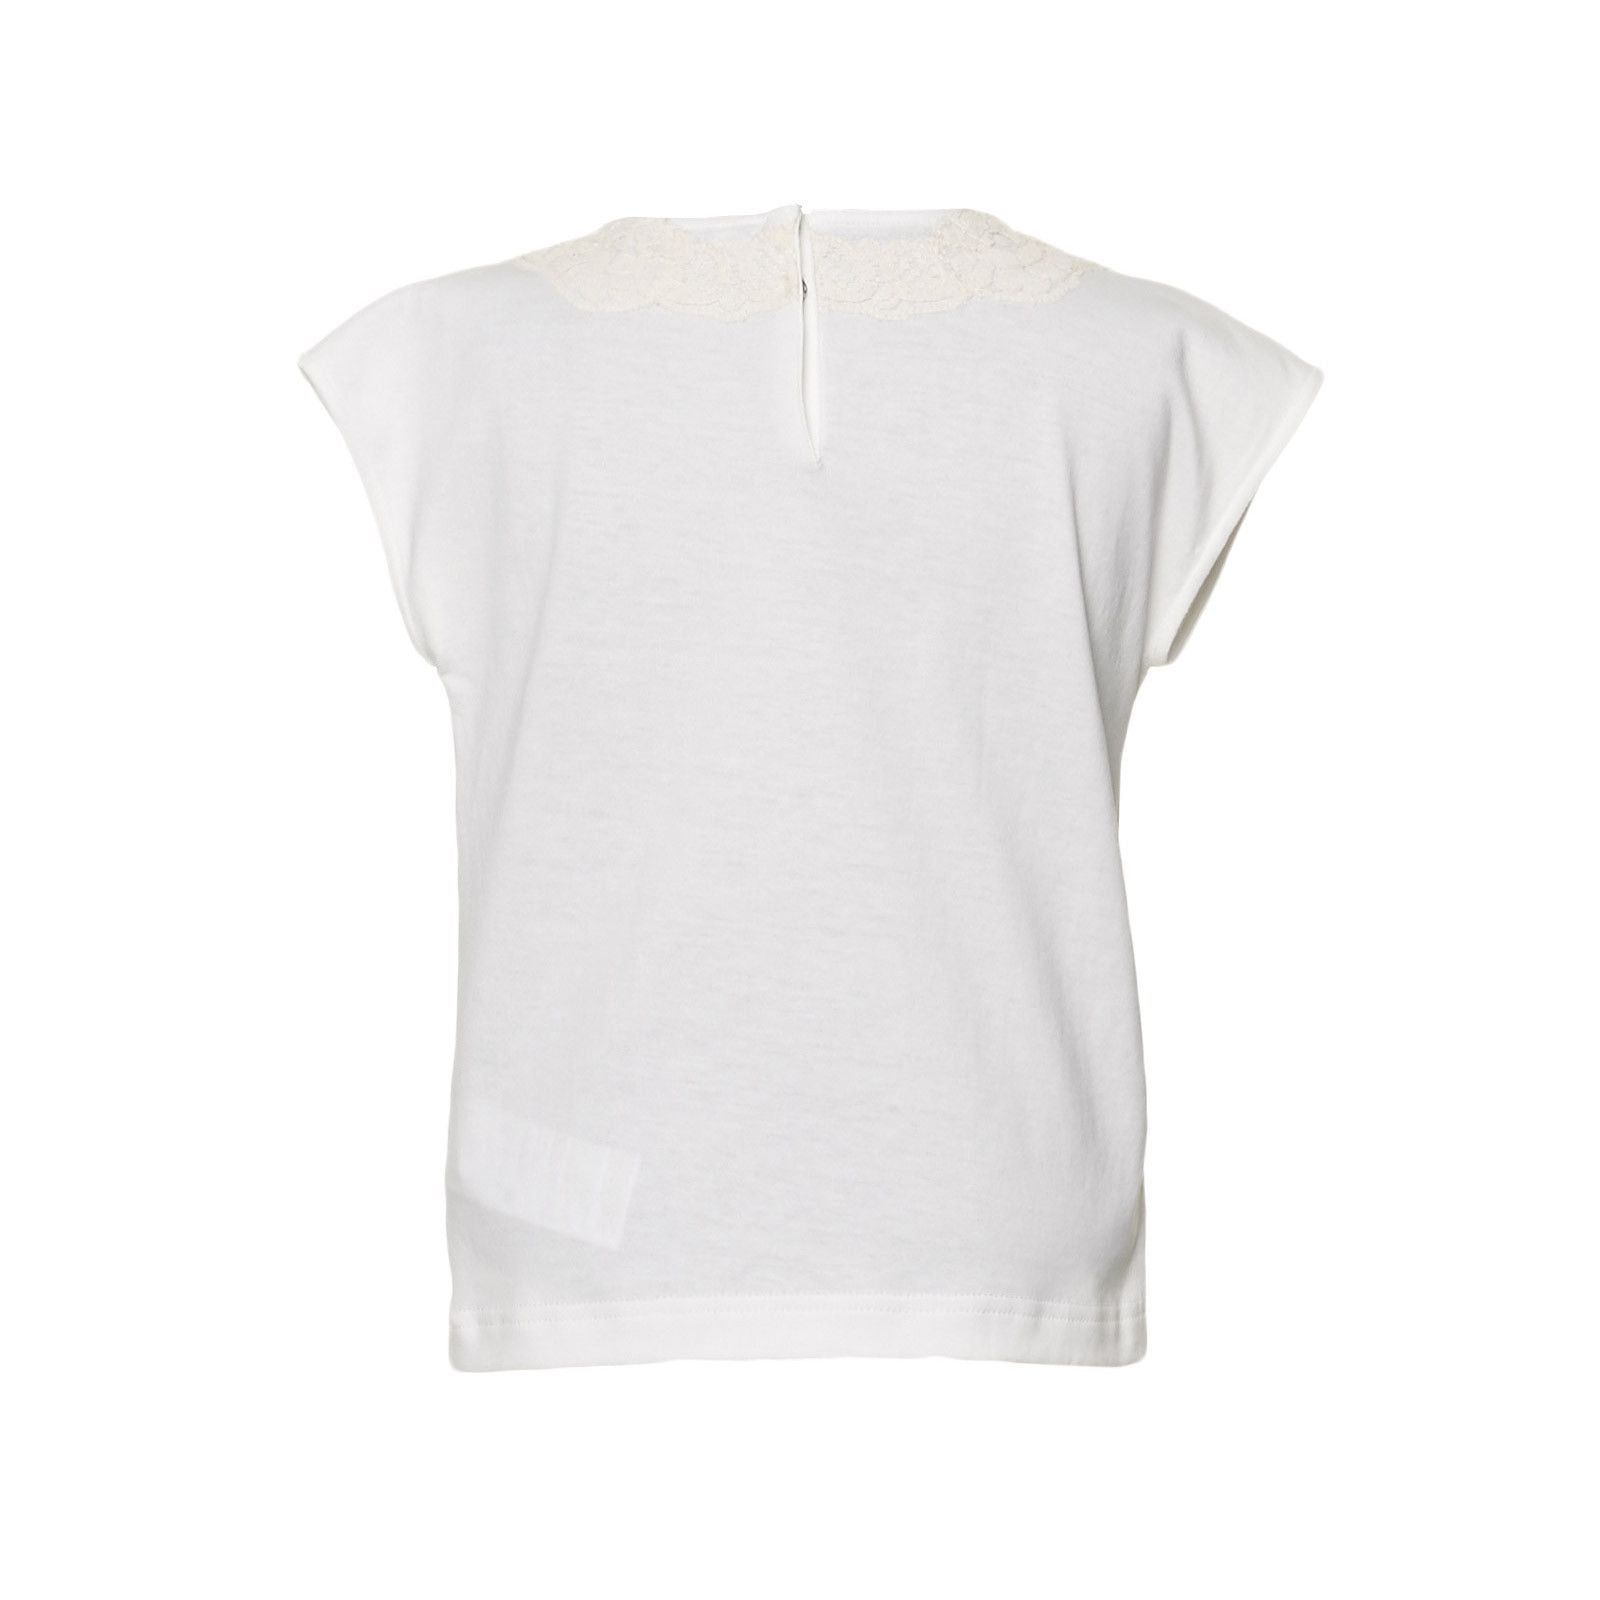 Girls White Cotton T-Shirt With Black Bow Trims - CÉMAROSE | Children's Fashion Store - 2